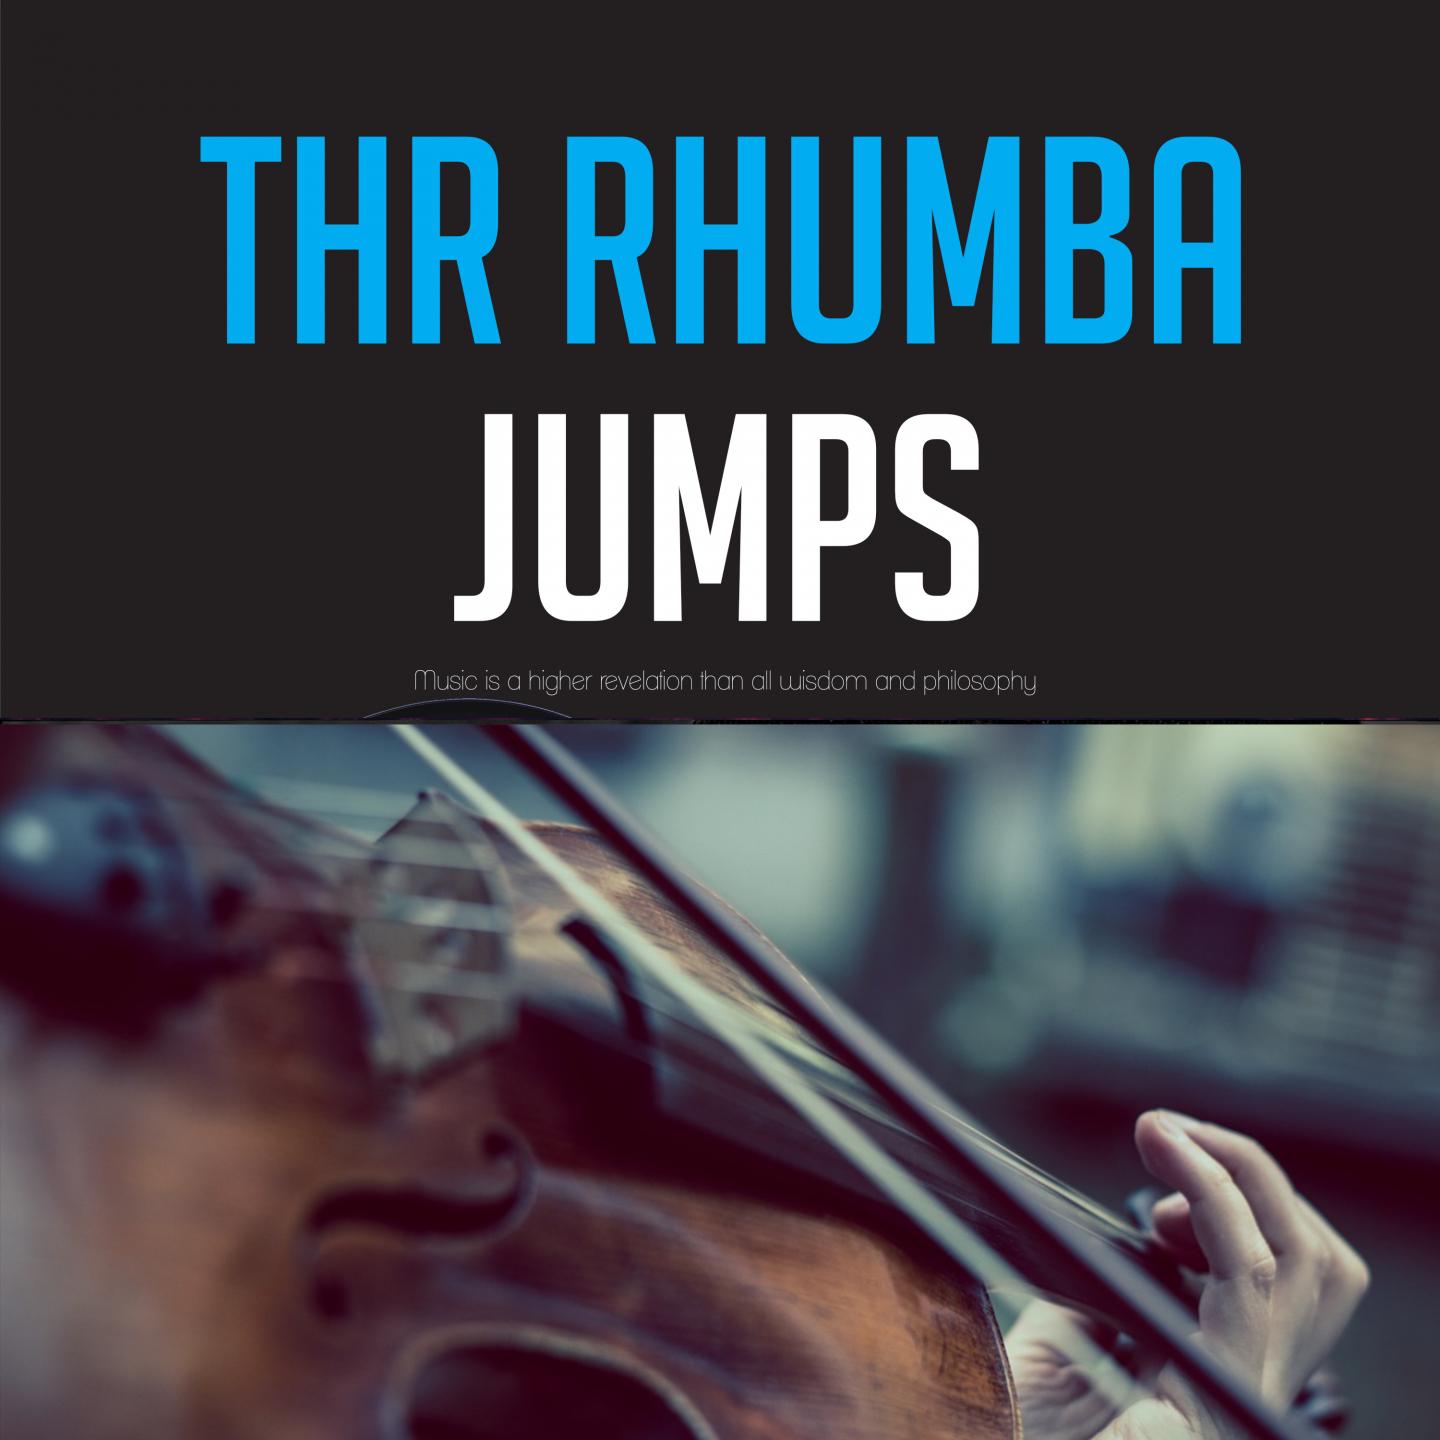 The Rhumba Jumps